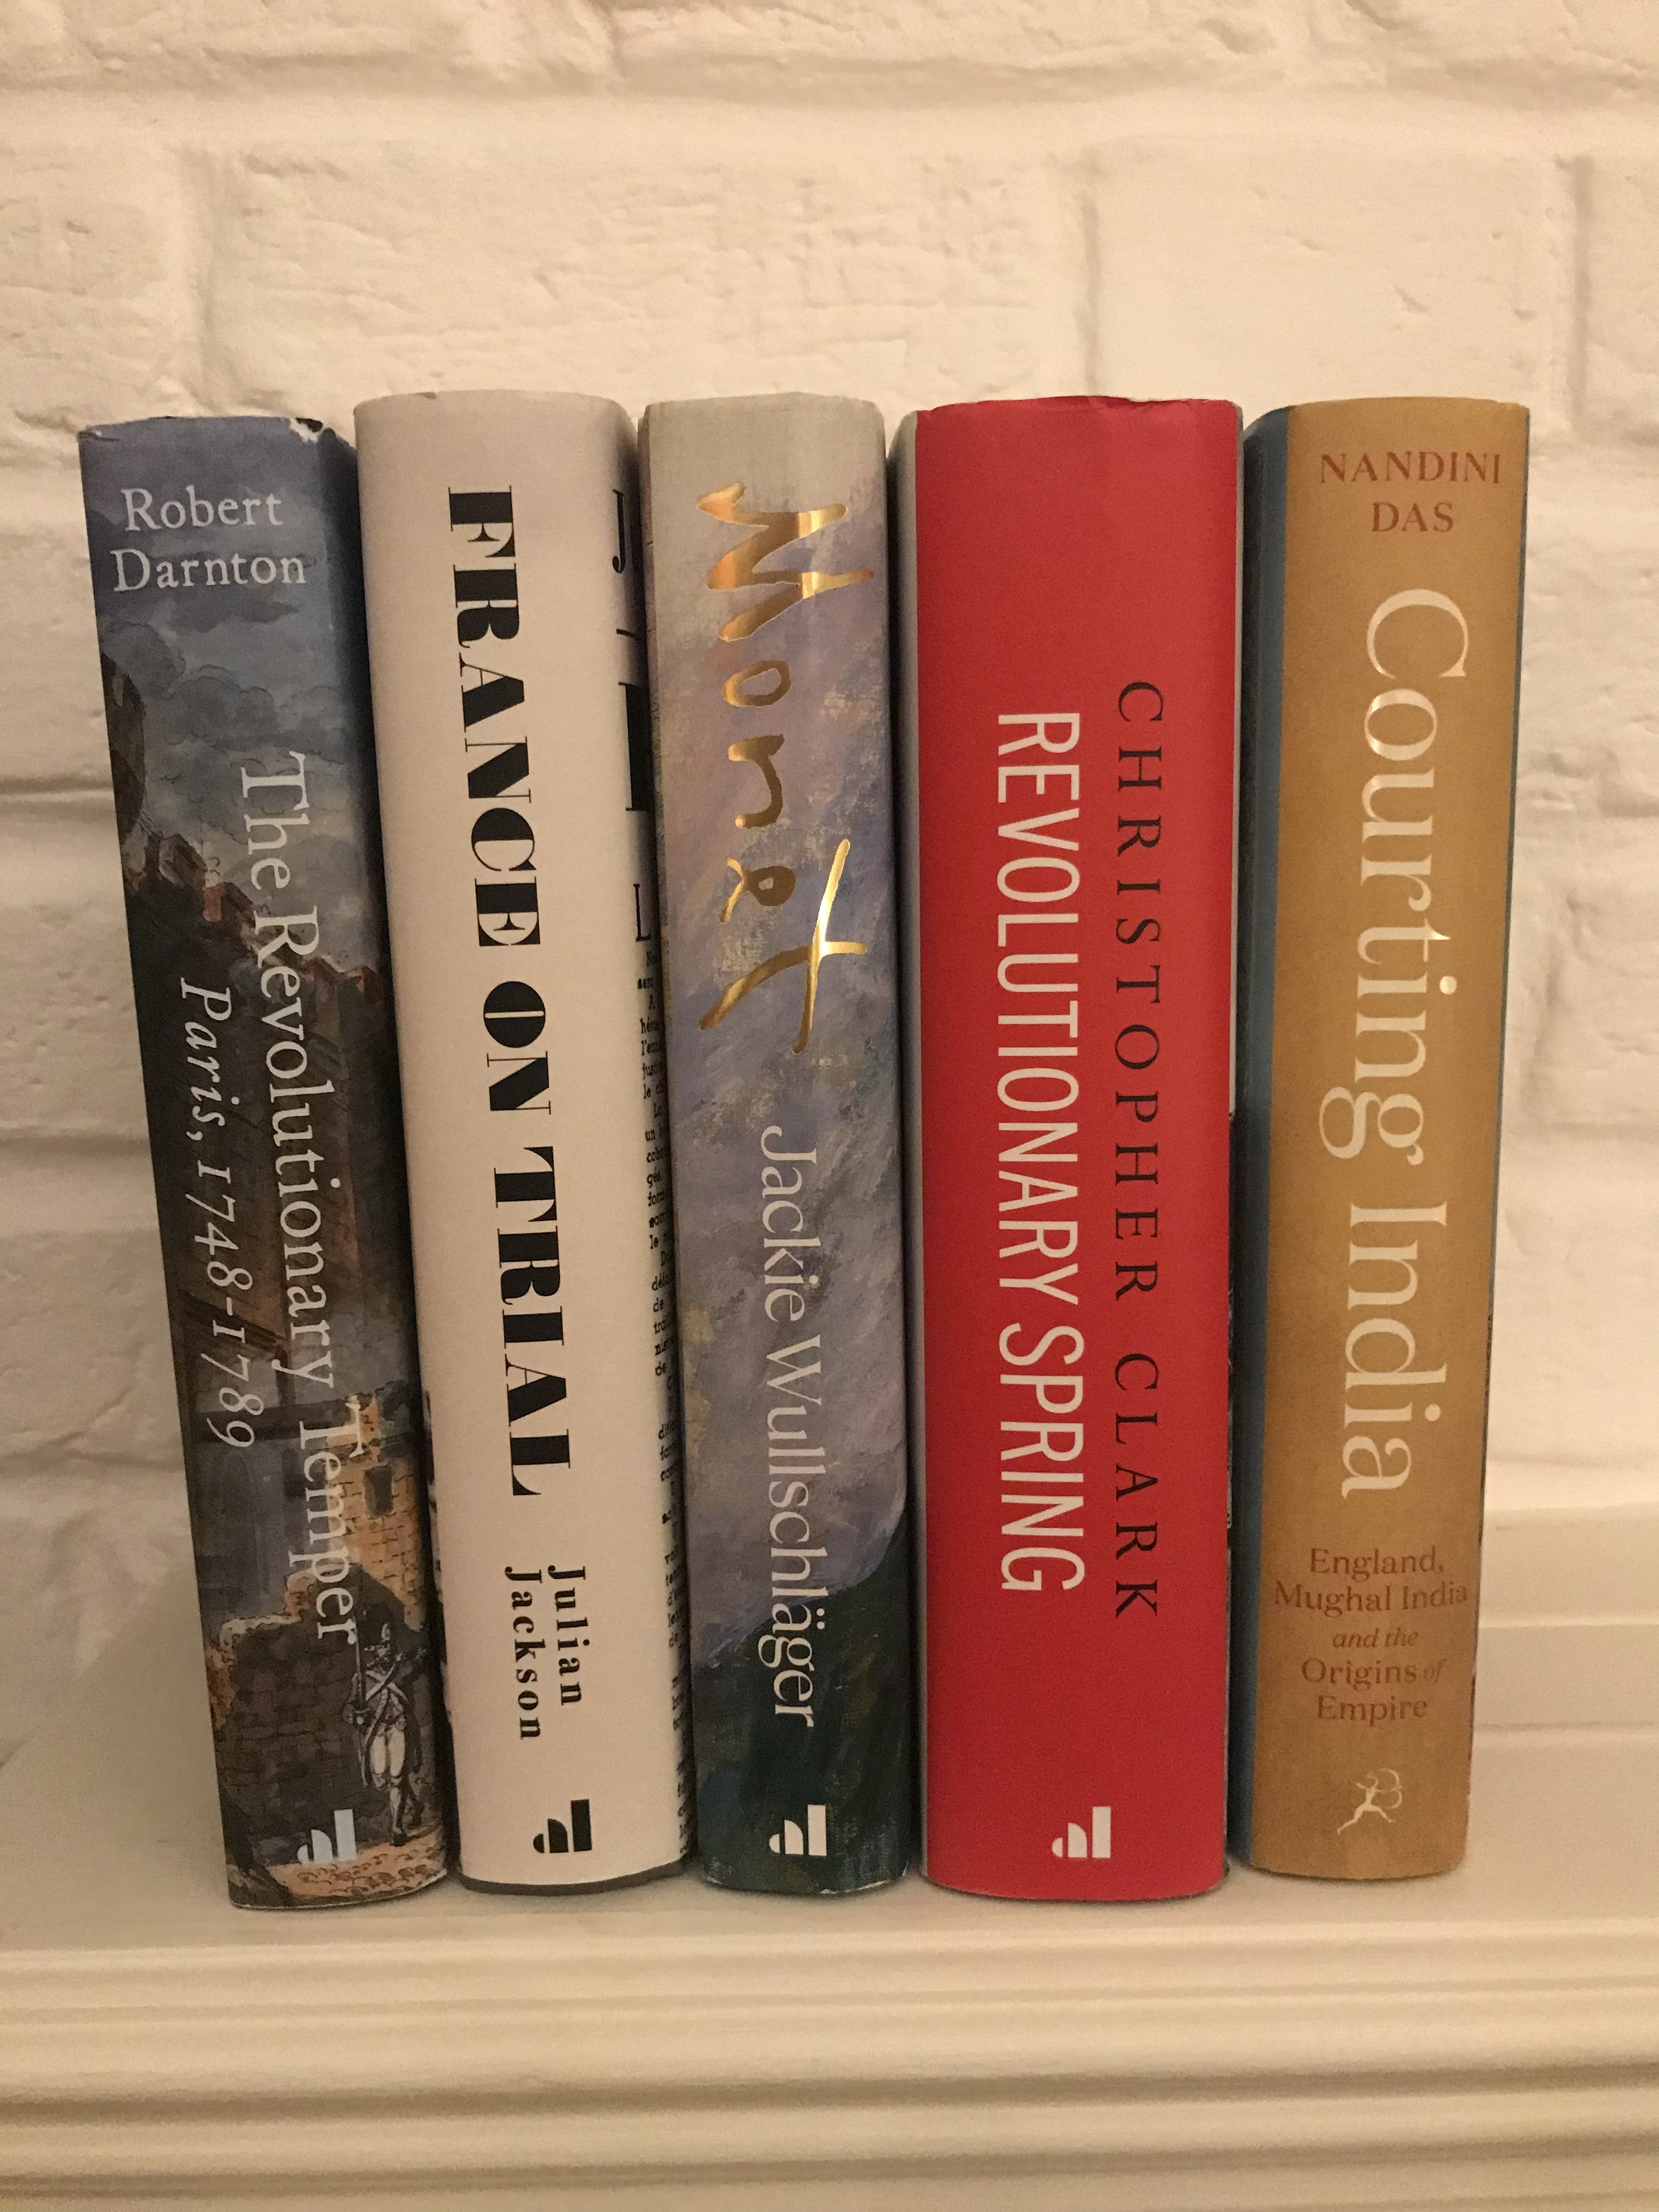 The five shortlisted books on a shelf